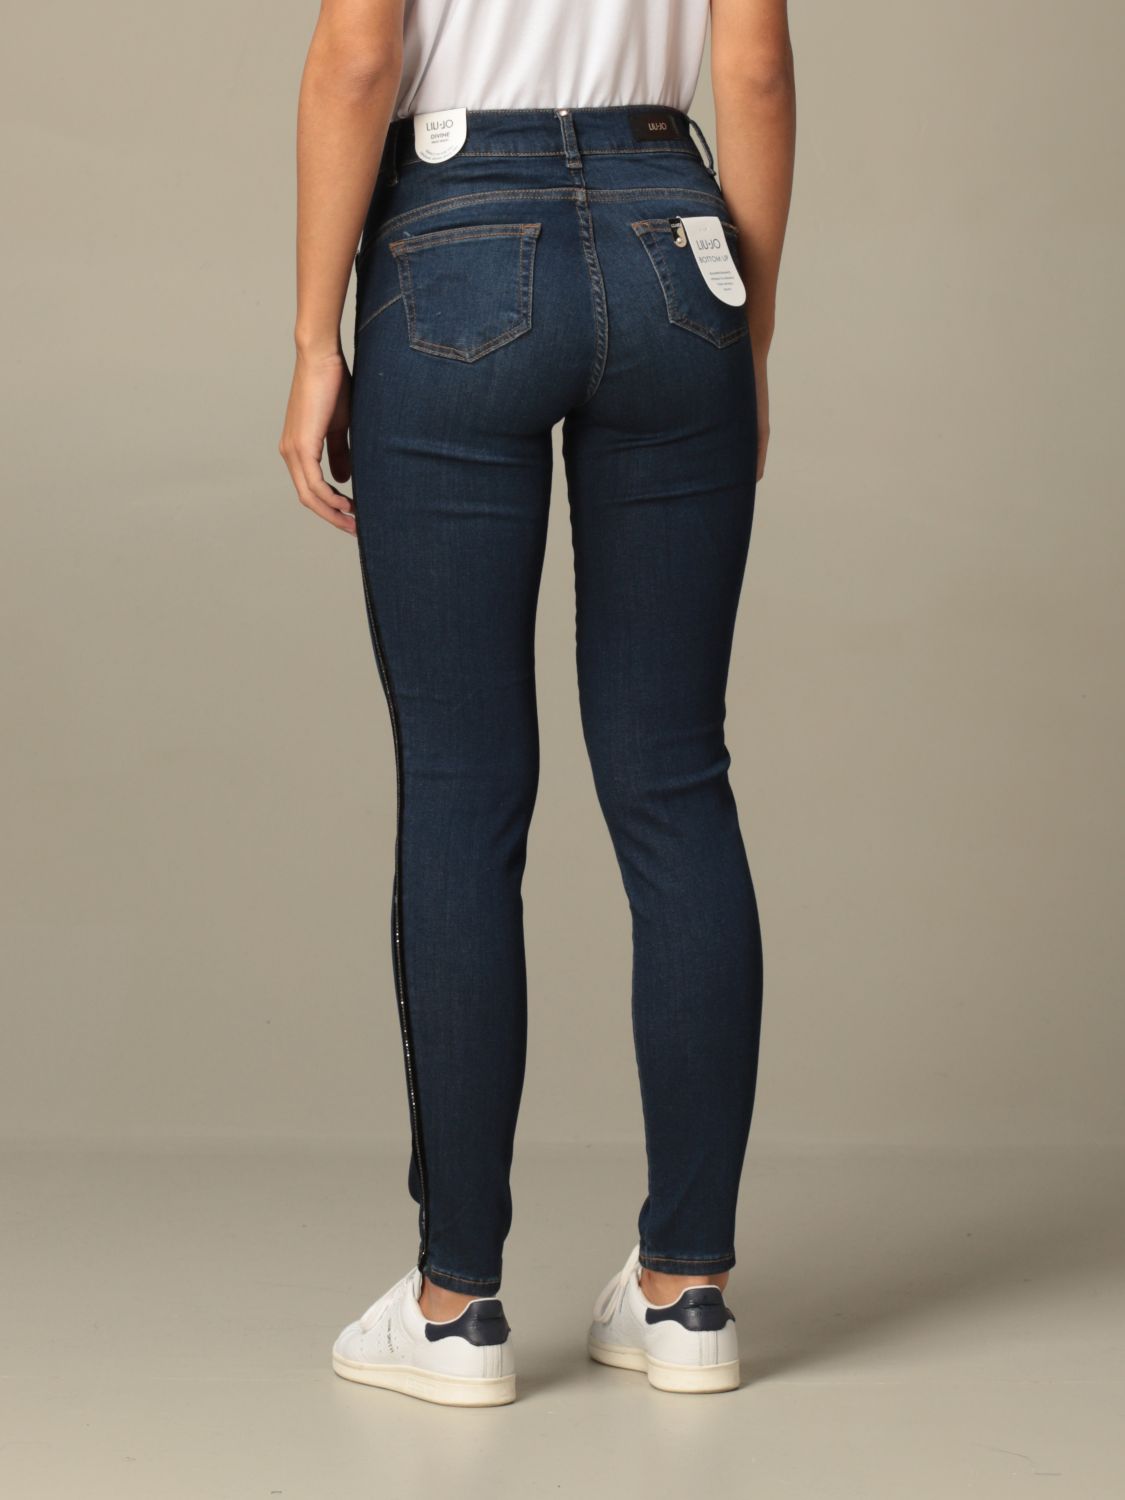 LIU JO: jeans in used denim with bands - Denim | Liu Jo jeans UF0013DM510 online GIGLIO.COM